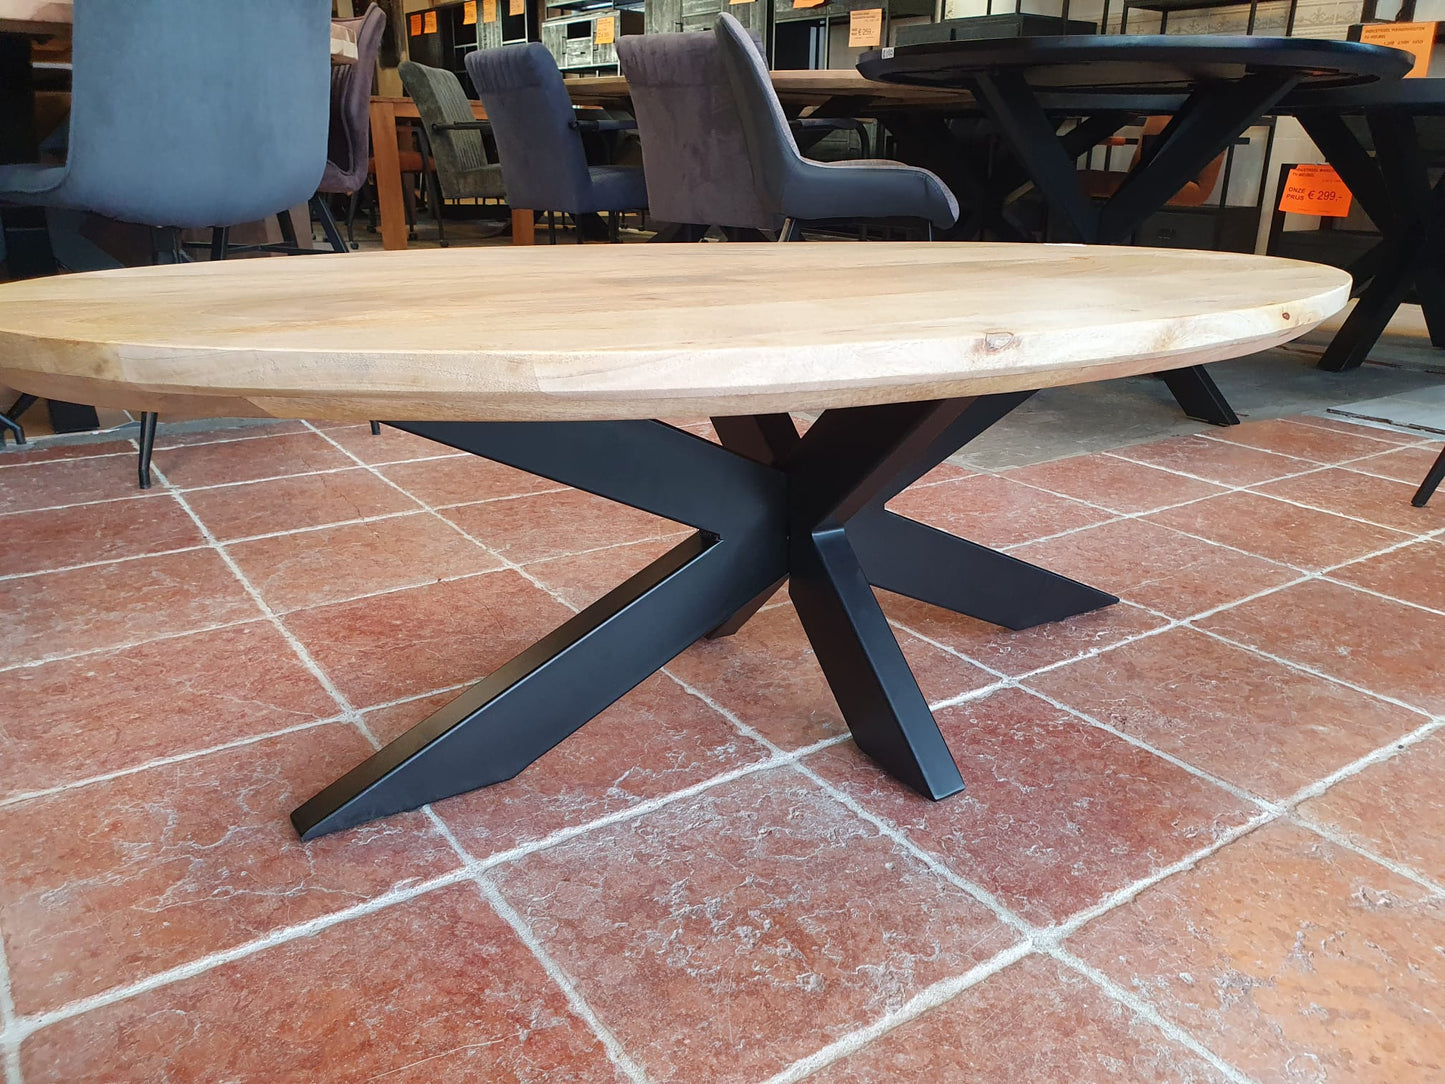 Gladde mangohouten naturelkleurige ovale salontafel met swiss edge 120x60cm incl. zwart metalen matrix/spinpoot